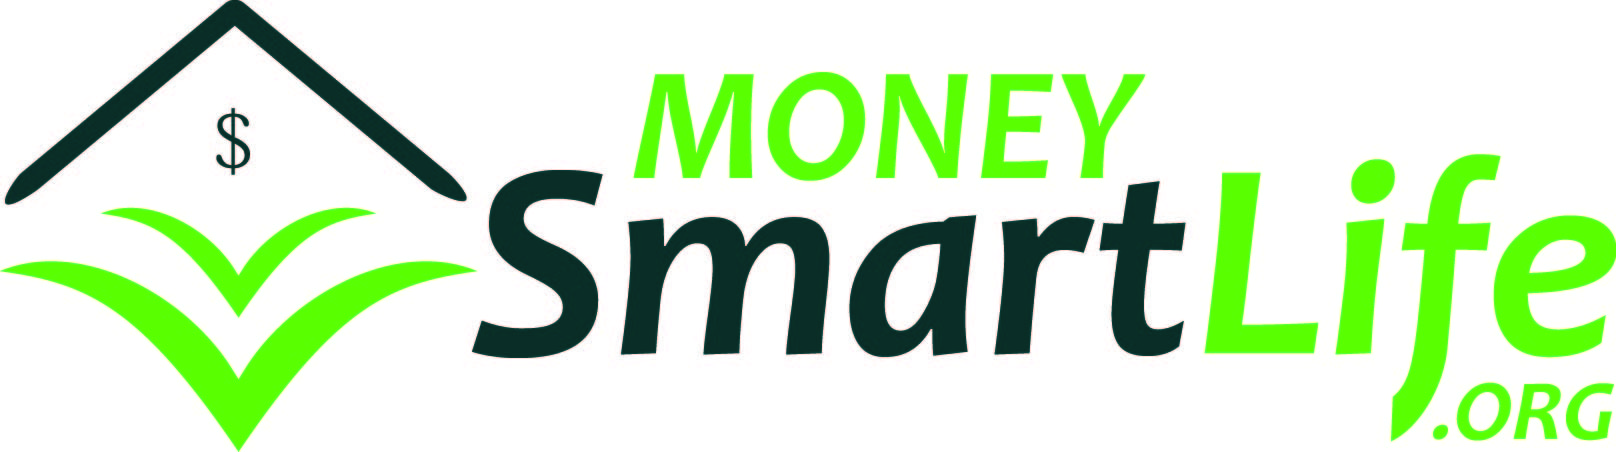 MoneySmartLife.org logo